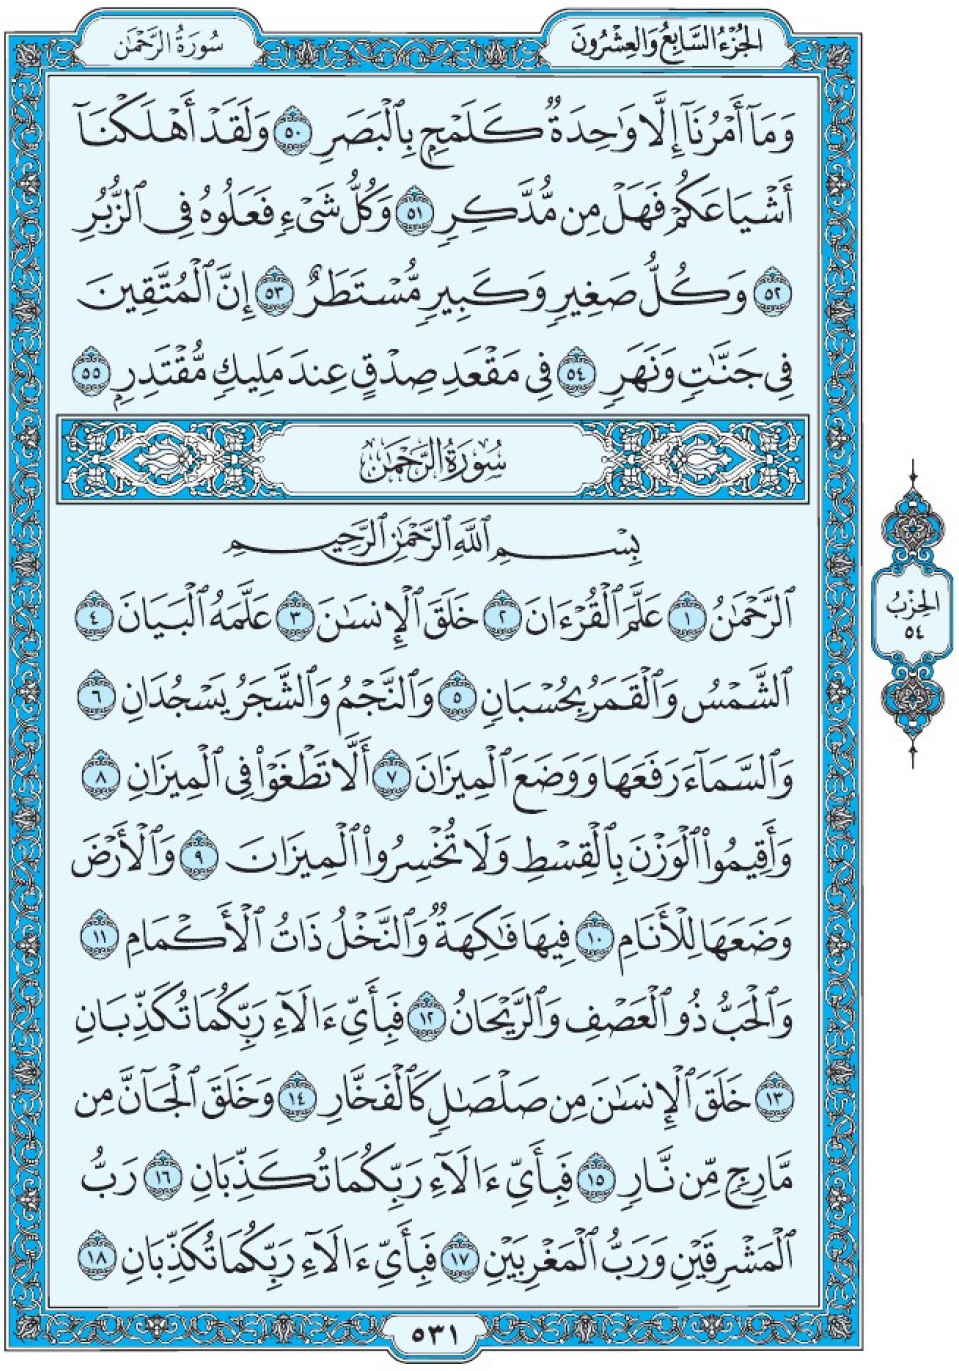 Коран Мединский мусхаф страница 531, сура 55 ар-Рахман سورة ٥٥ الرحمن 